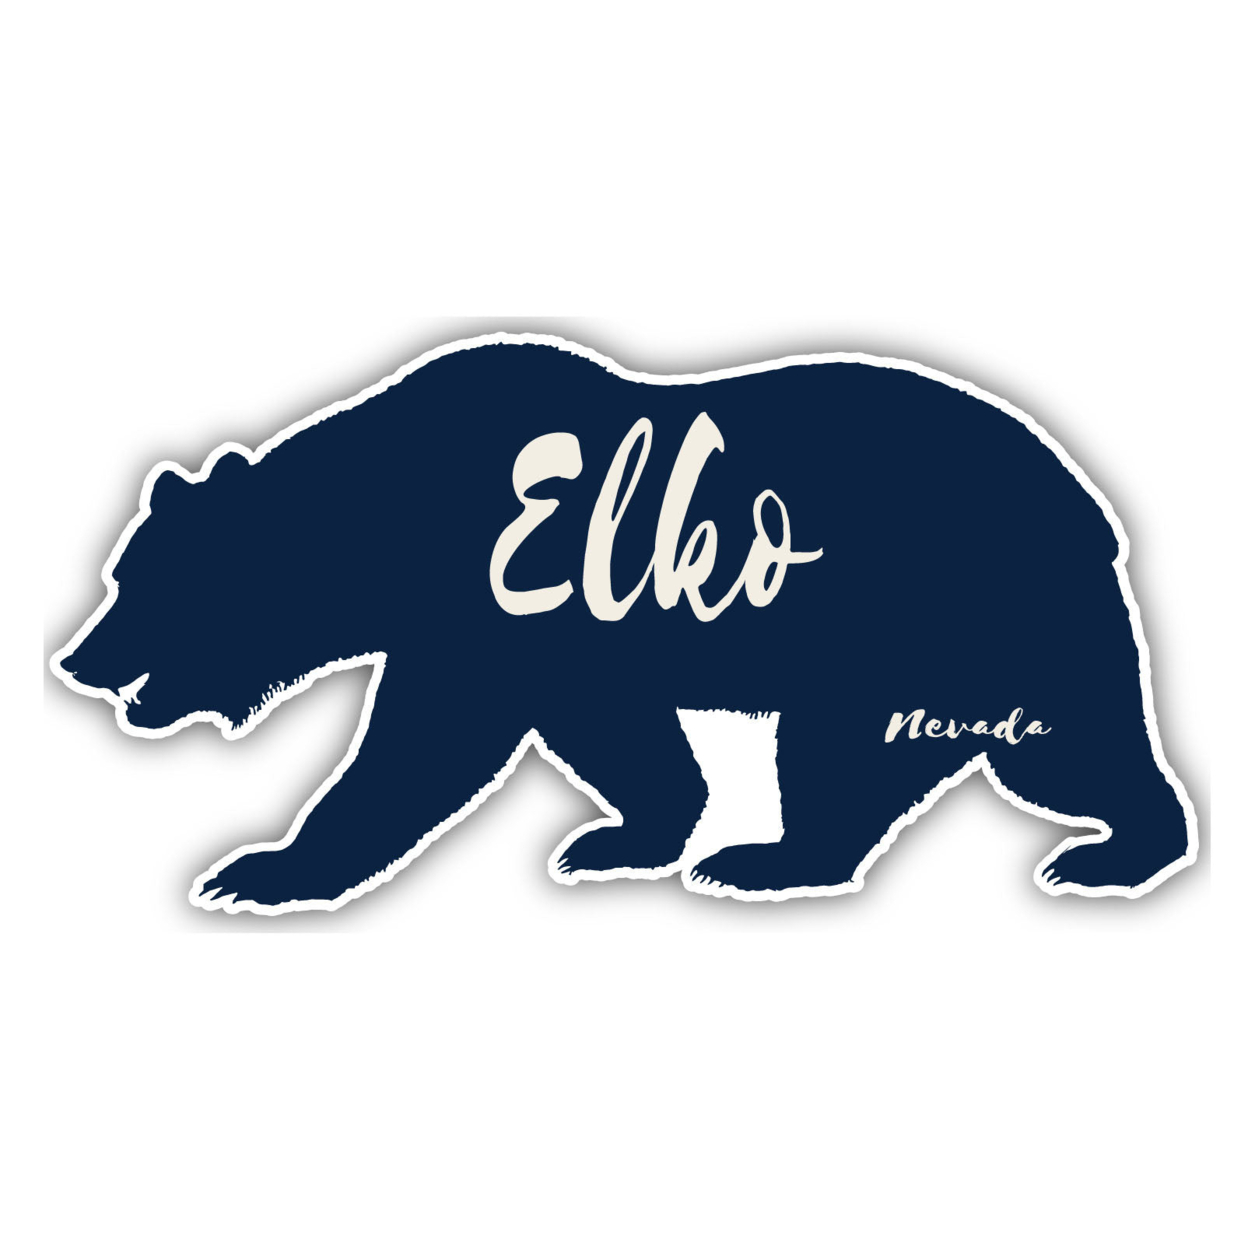 Elko Nevada Souvenir Decorative Stickers (Choose Theme And Size) - Single Unit, 6-Inch, Bear